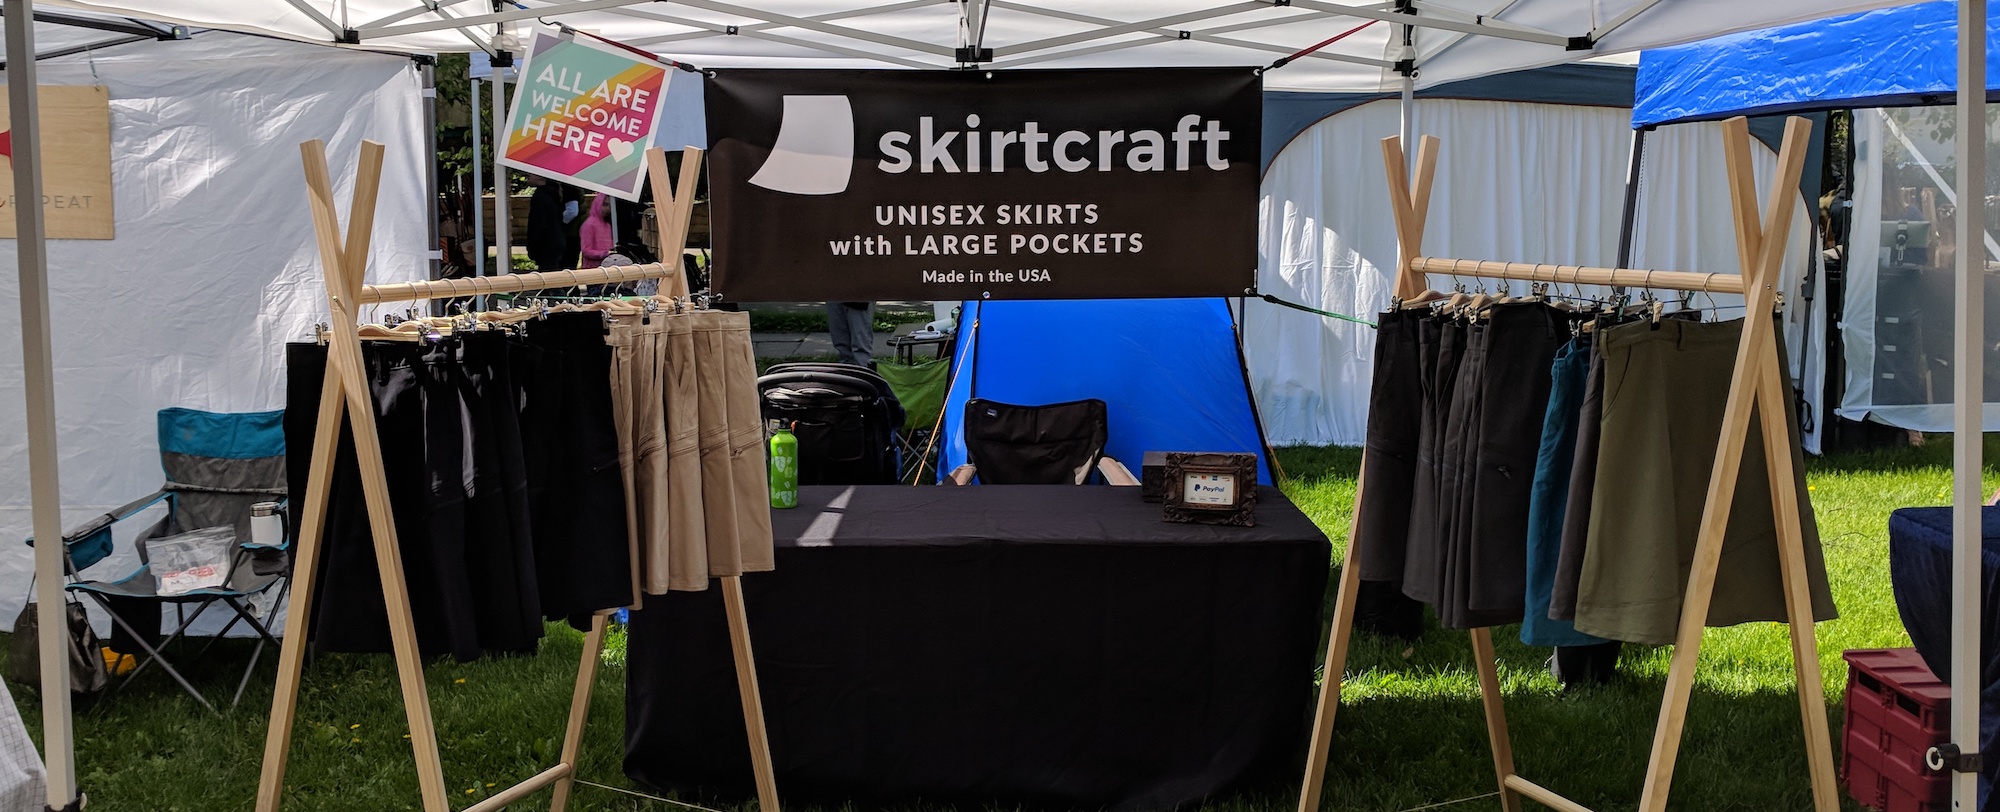 Skirtcraft booth at fair